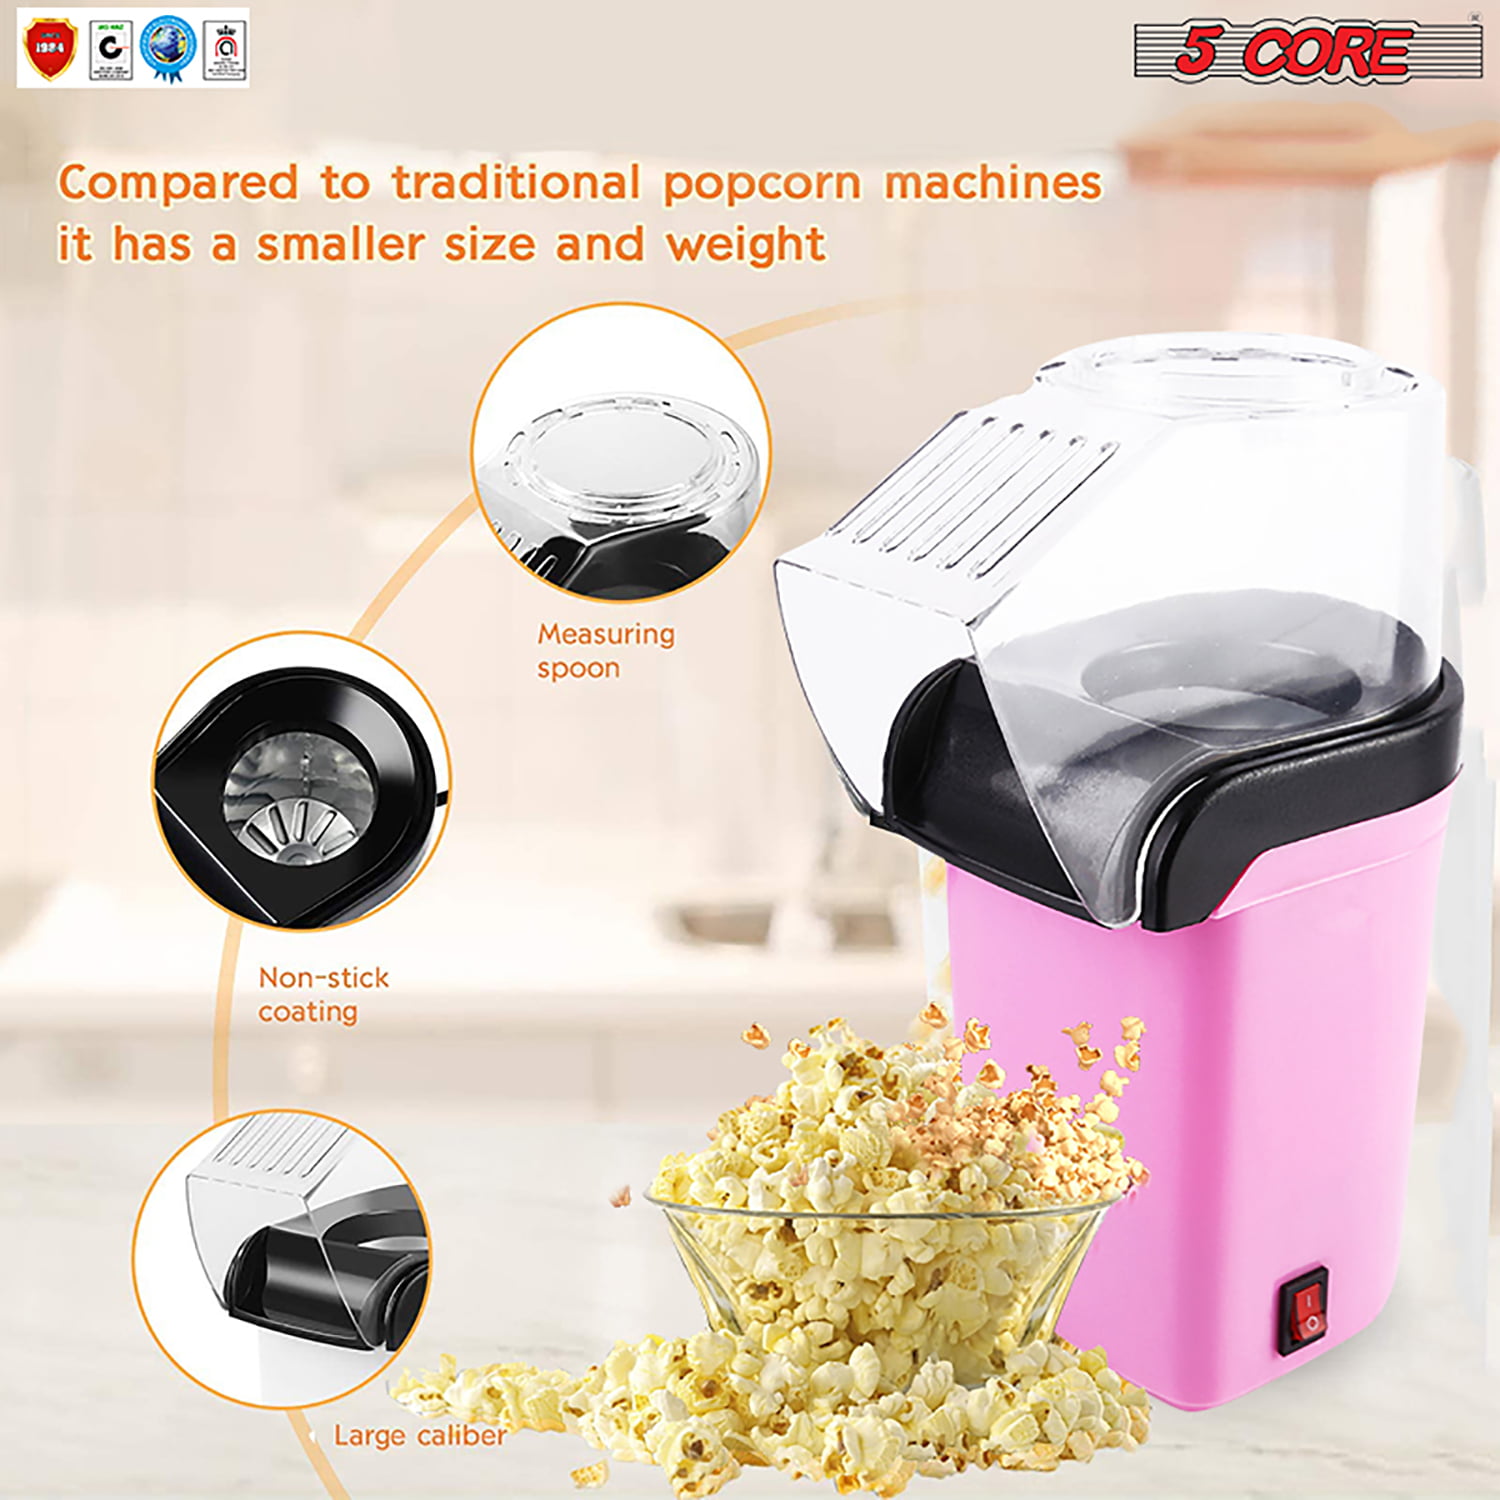 EU Plug Electric Popcorn Maker Household Automatic Popcorn Machine